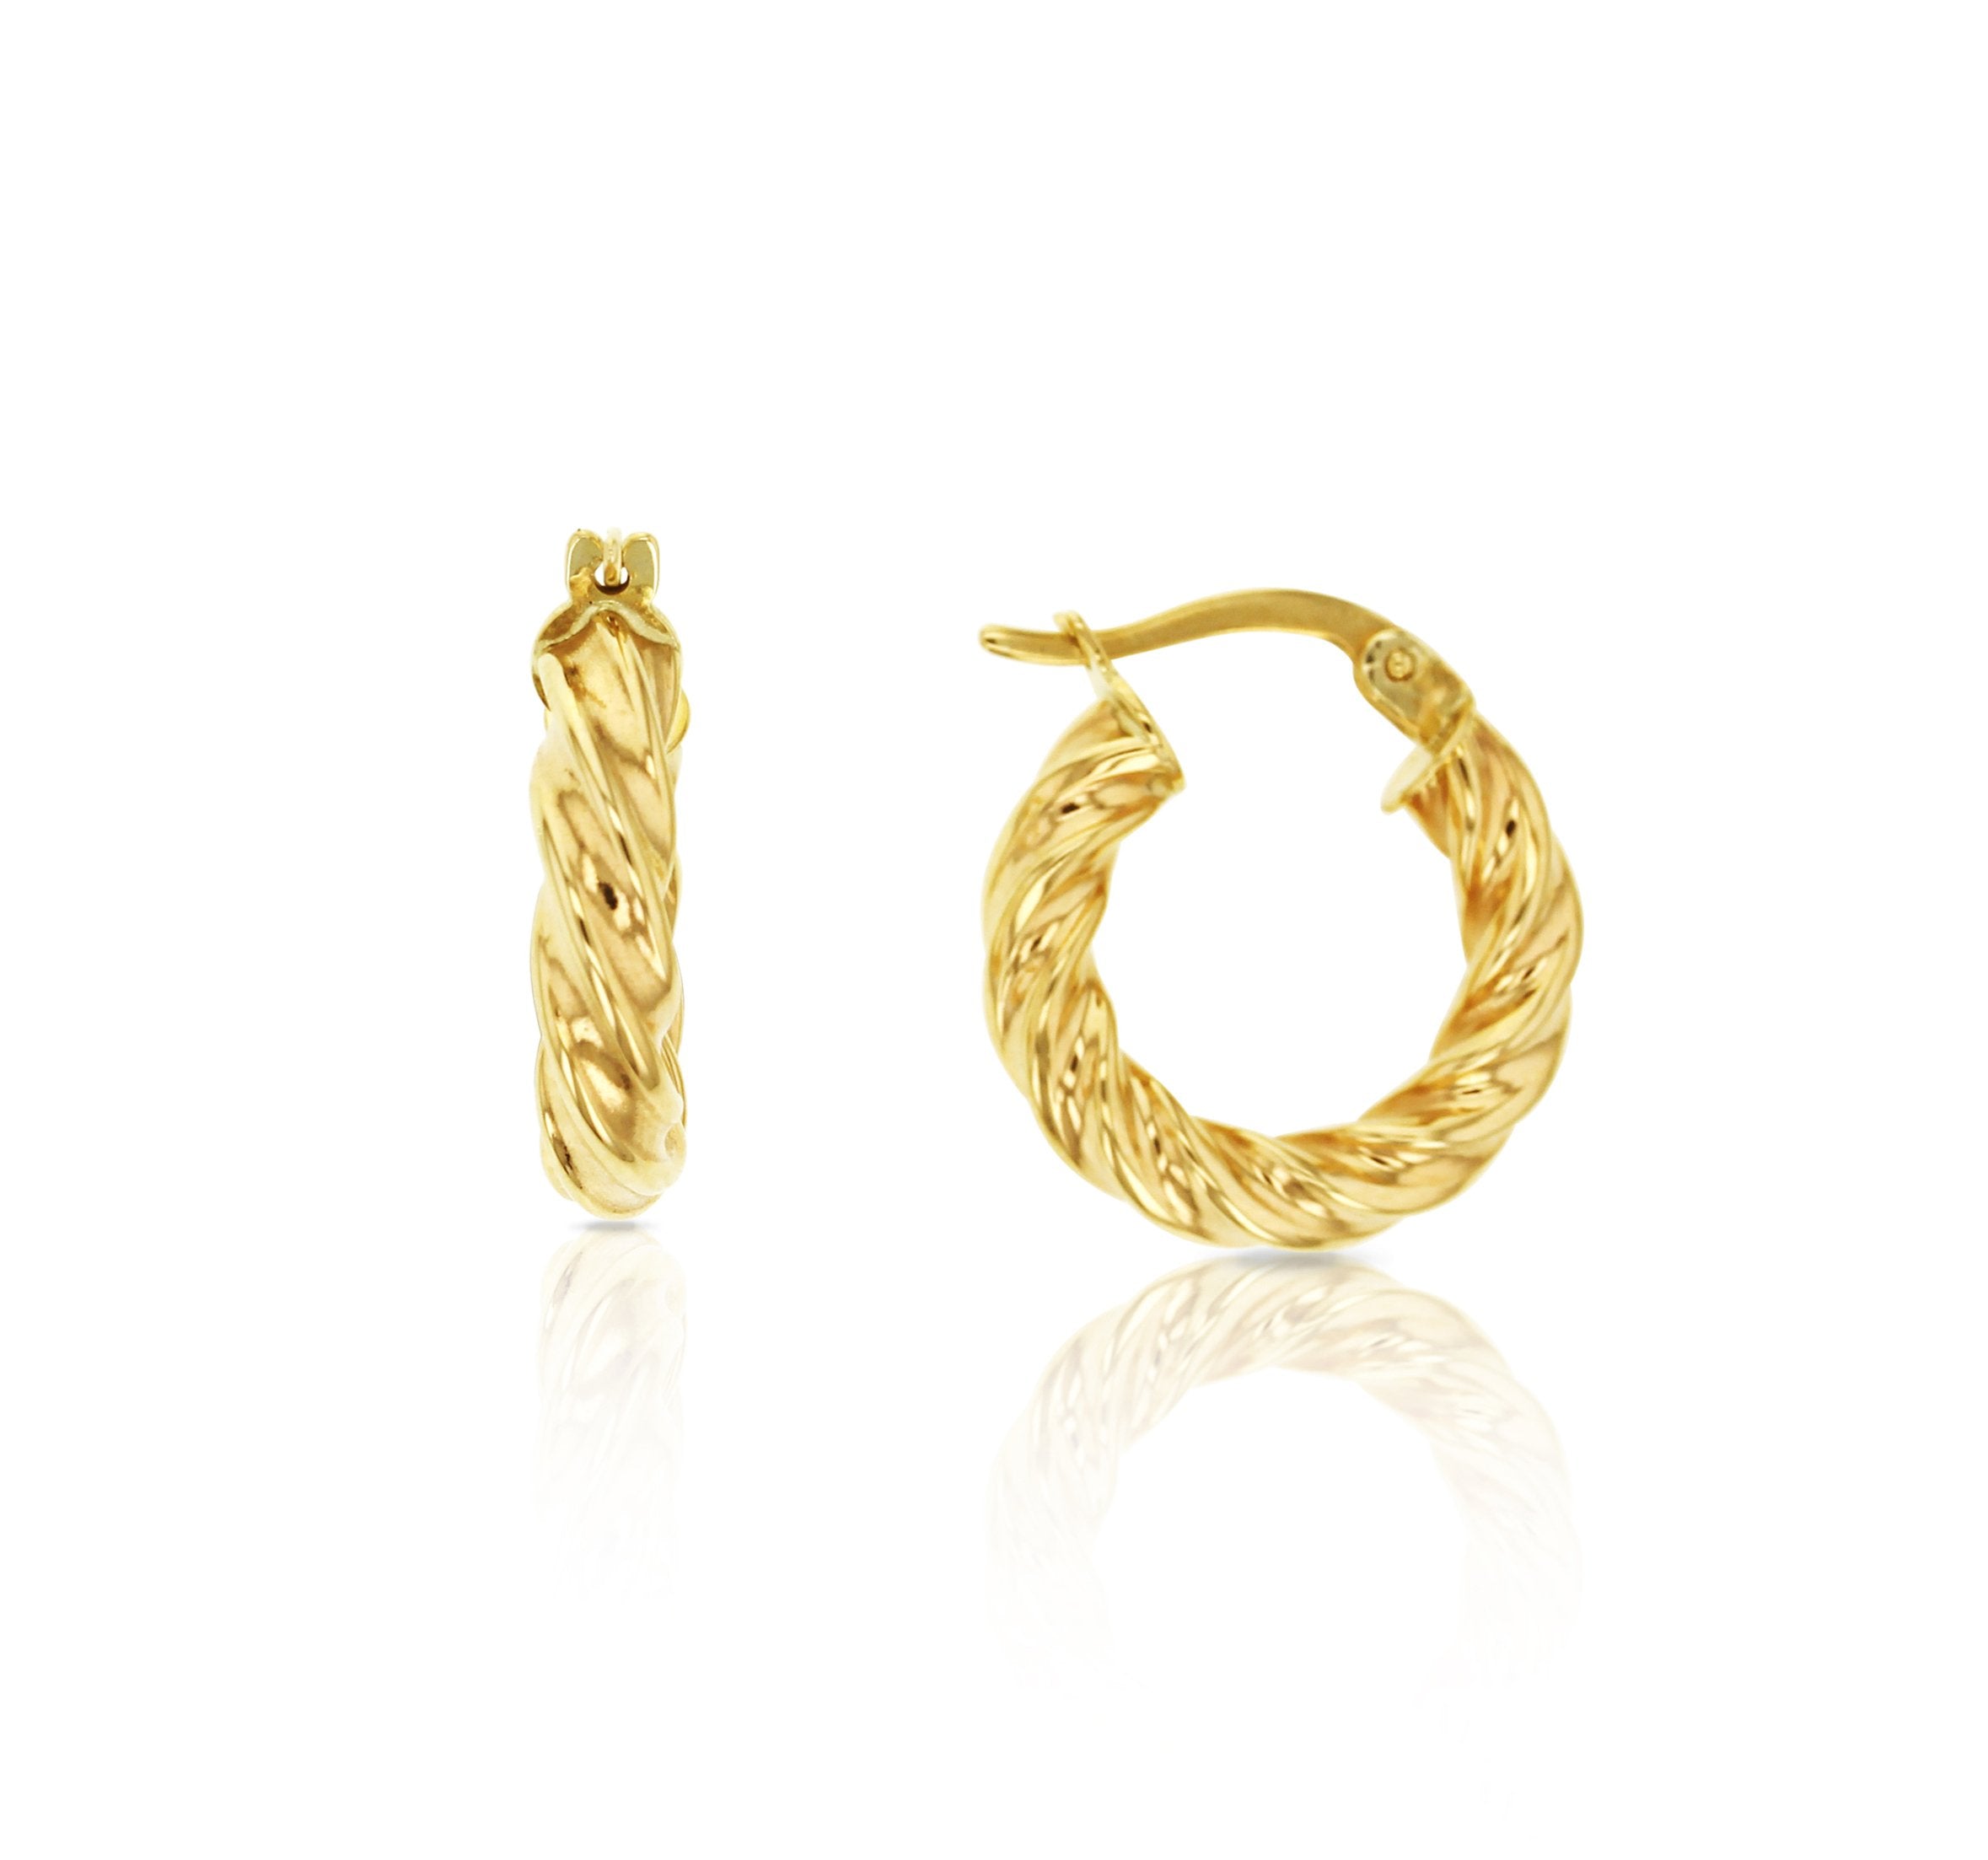 9ct yellow gold twist hoop earrings